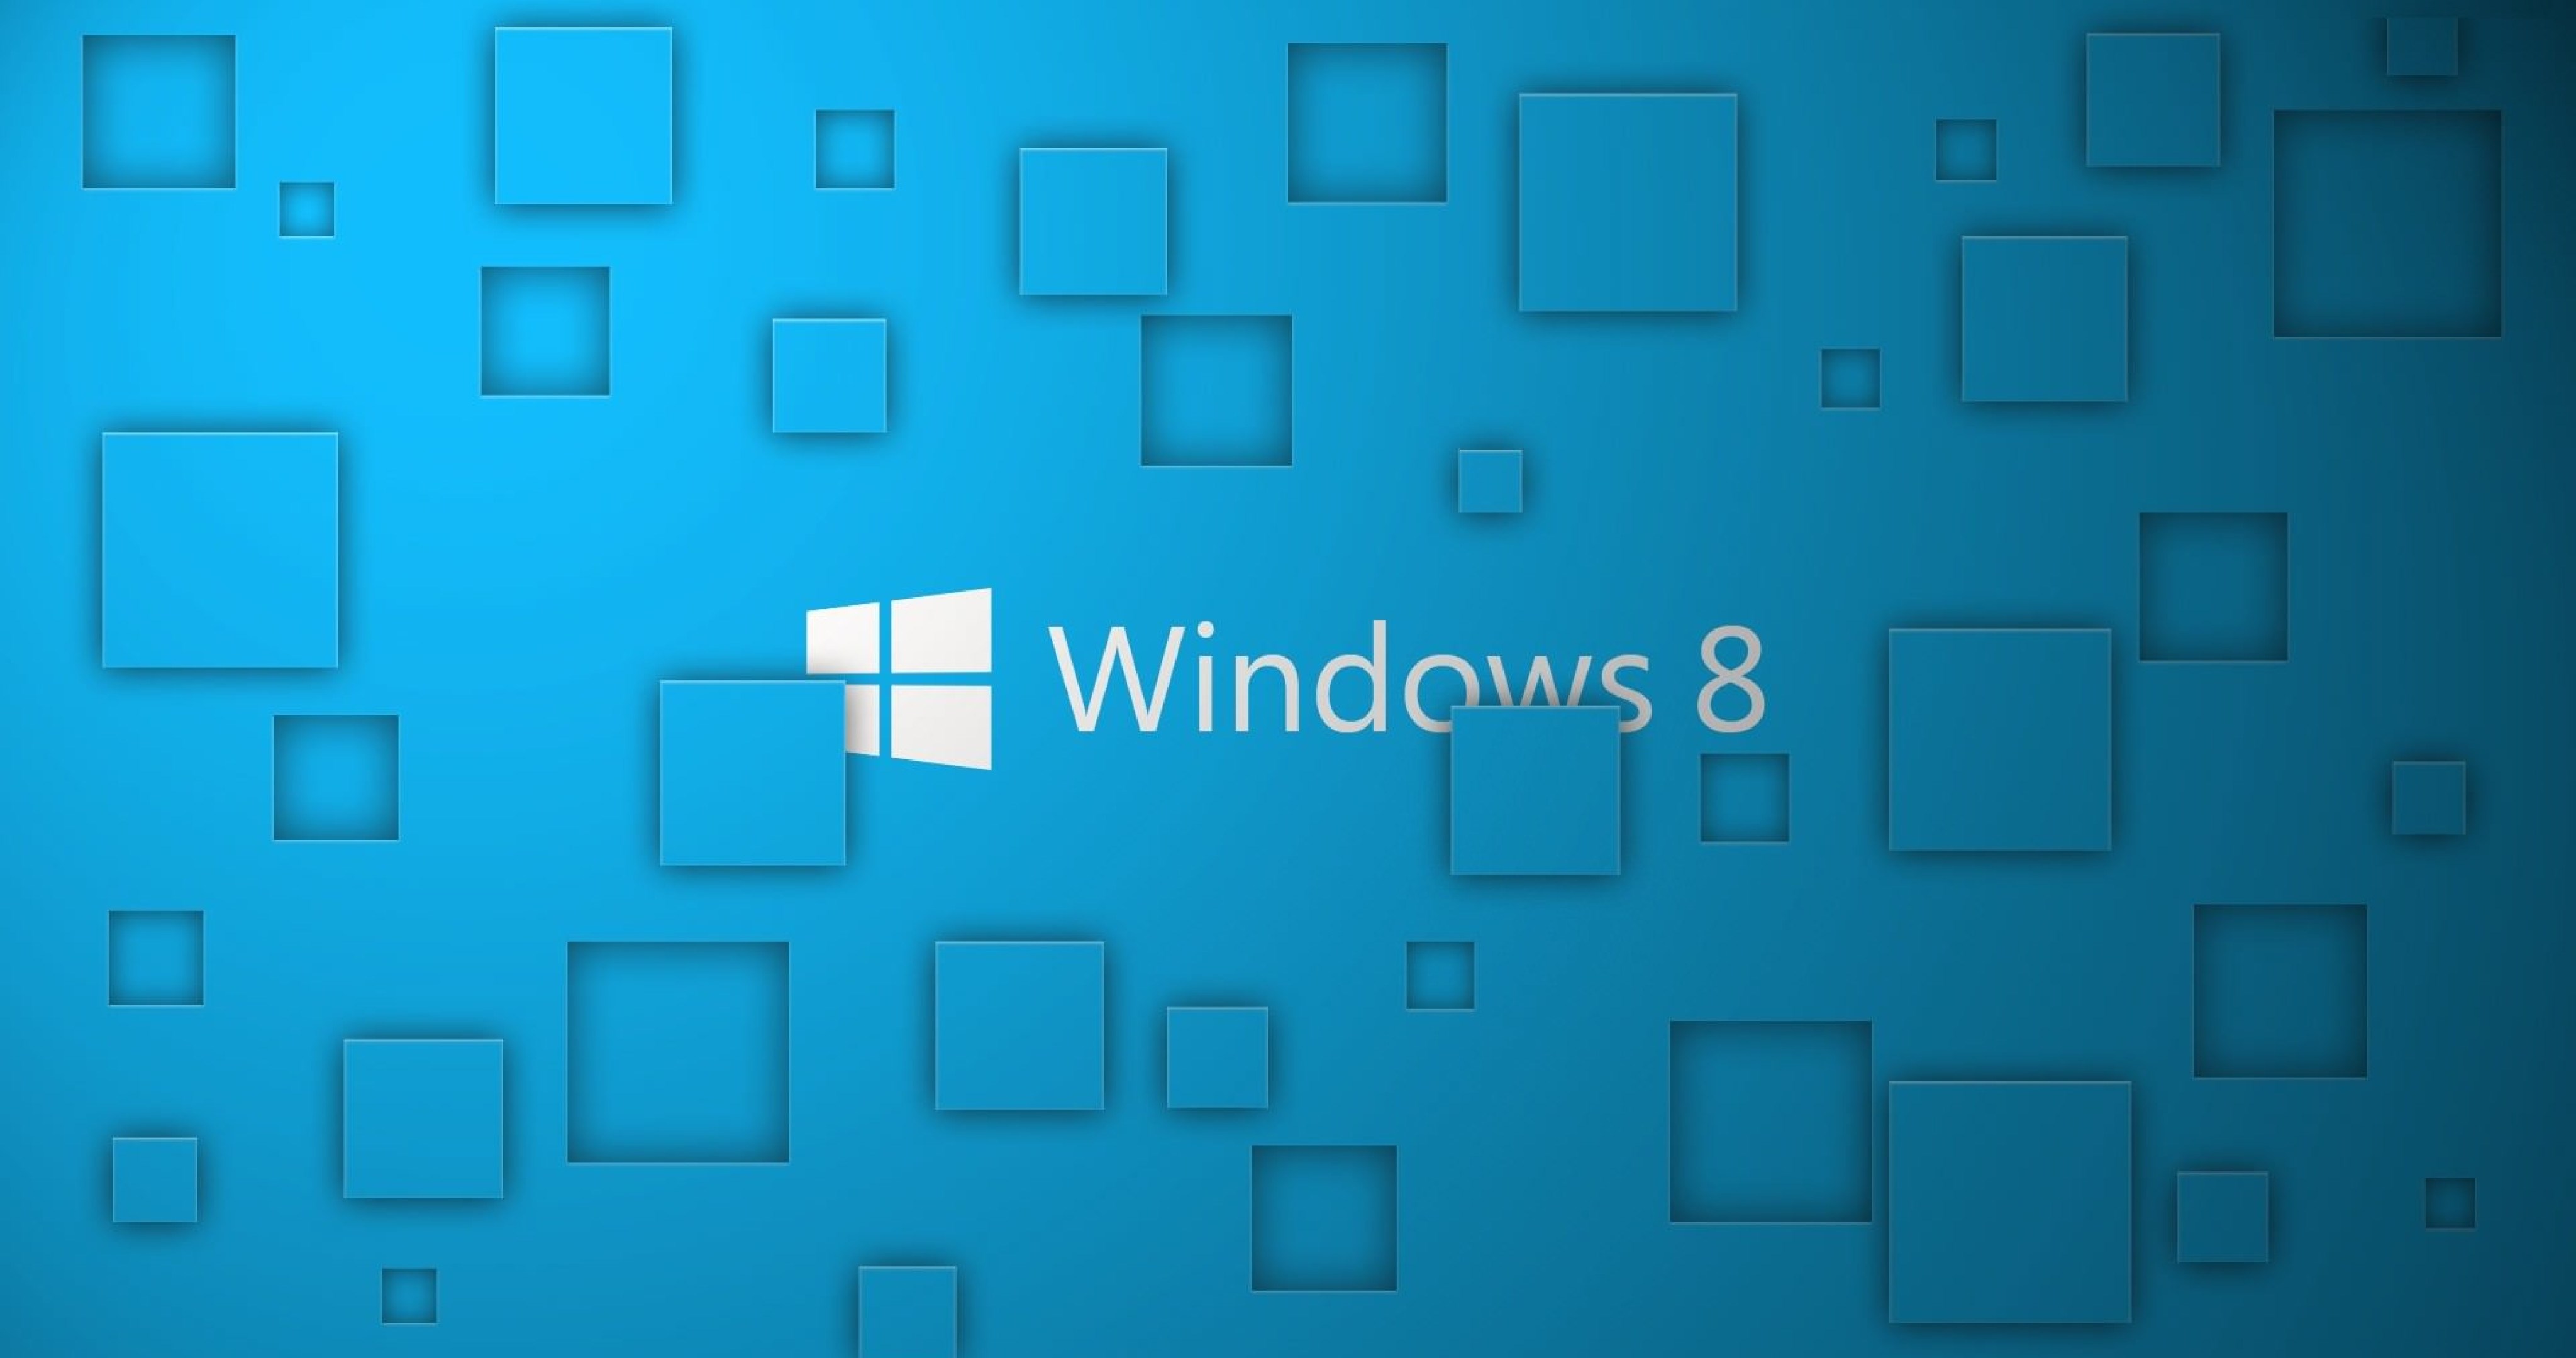 Windows 8 Wallpaper Hd Free Download - Background Desktop Windows 8 -  1920x1080 Wallpaper 